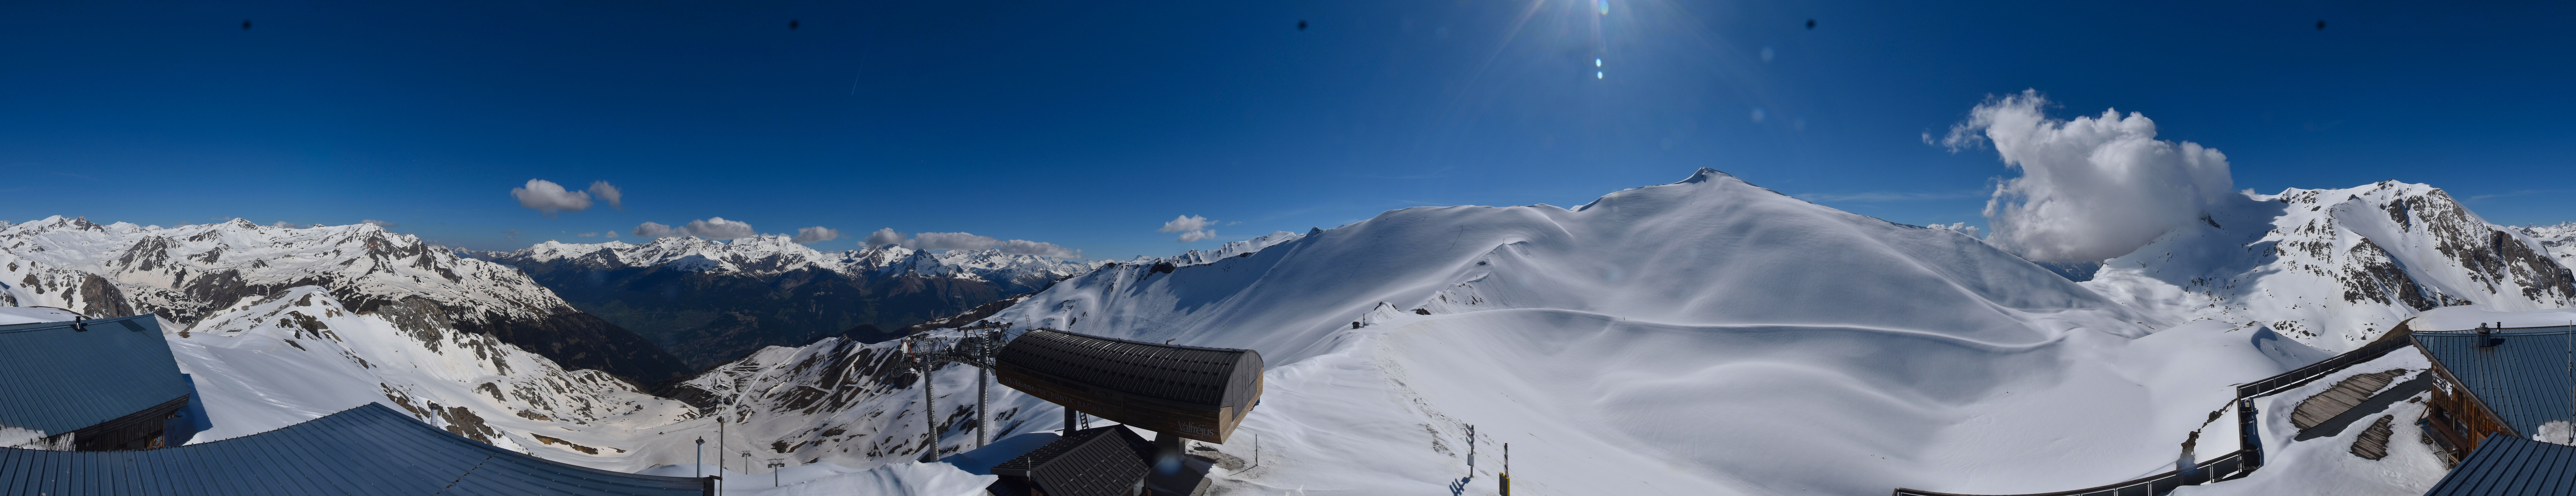 Valfrejus webcam - Punta Bagna ski station